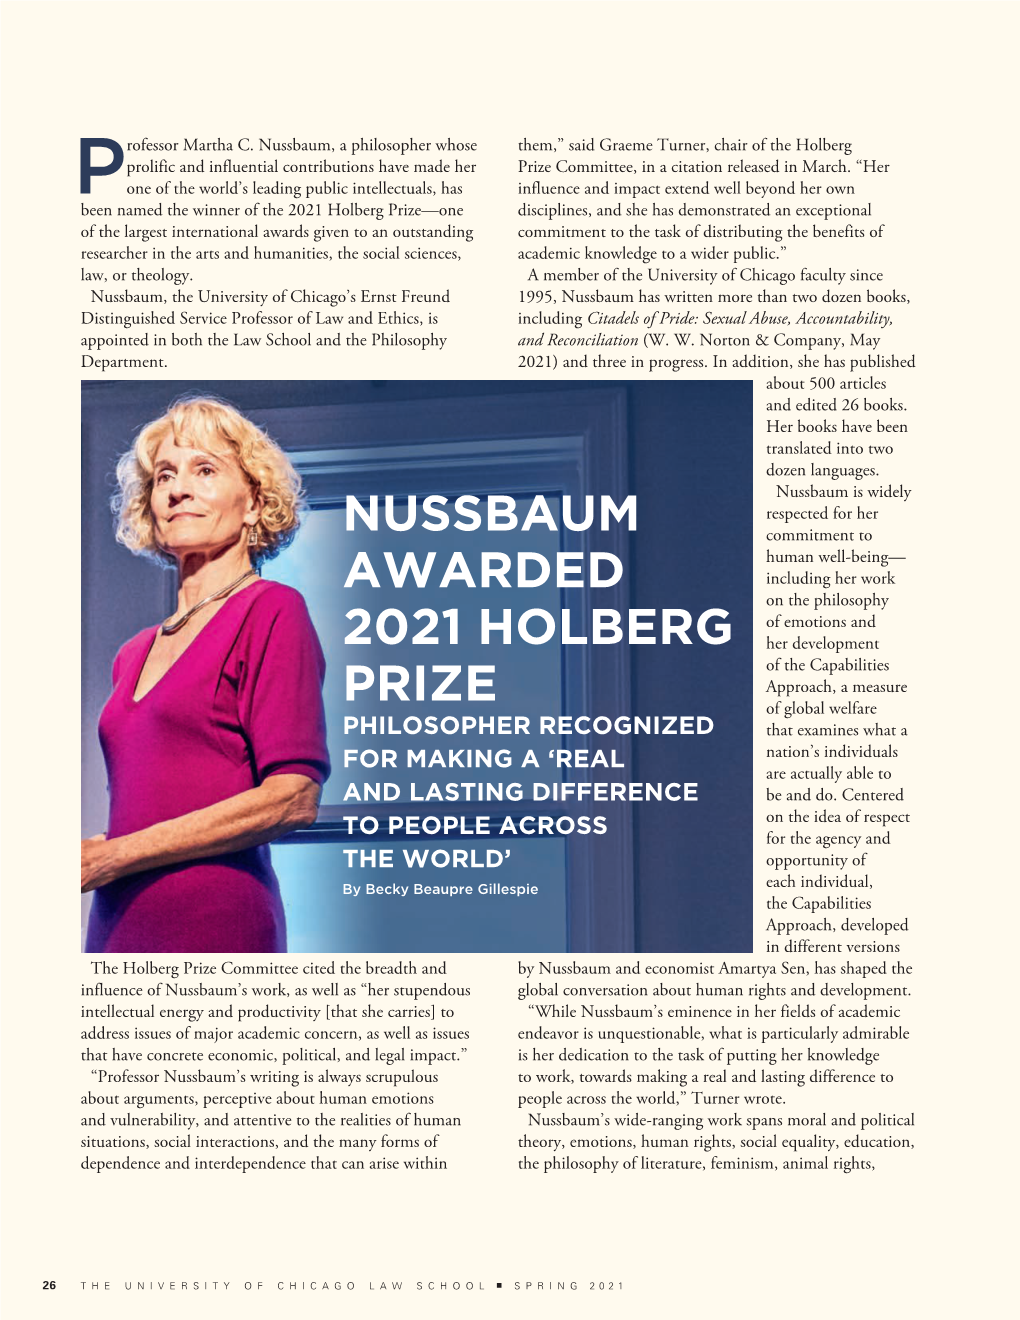 Nussbaum Awarded 2021 Holberg Prize